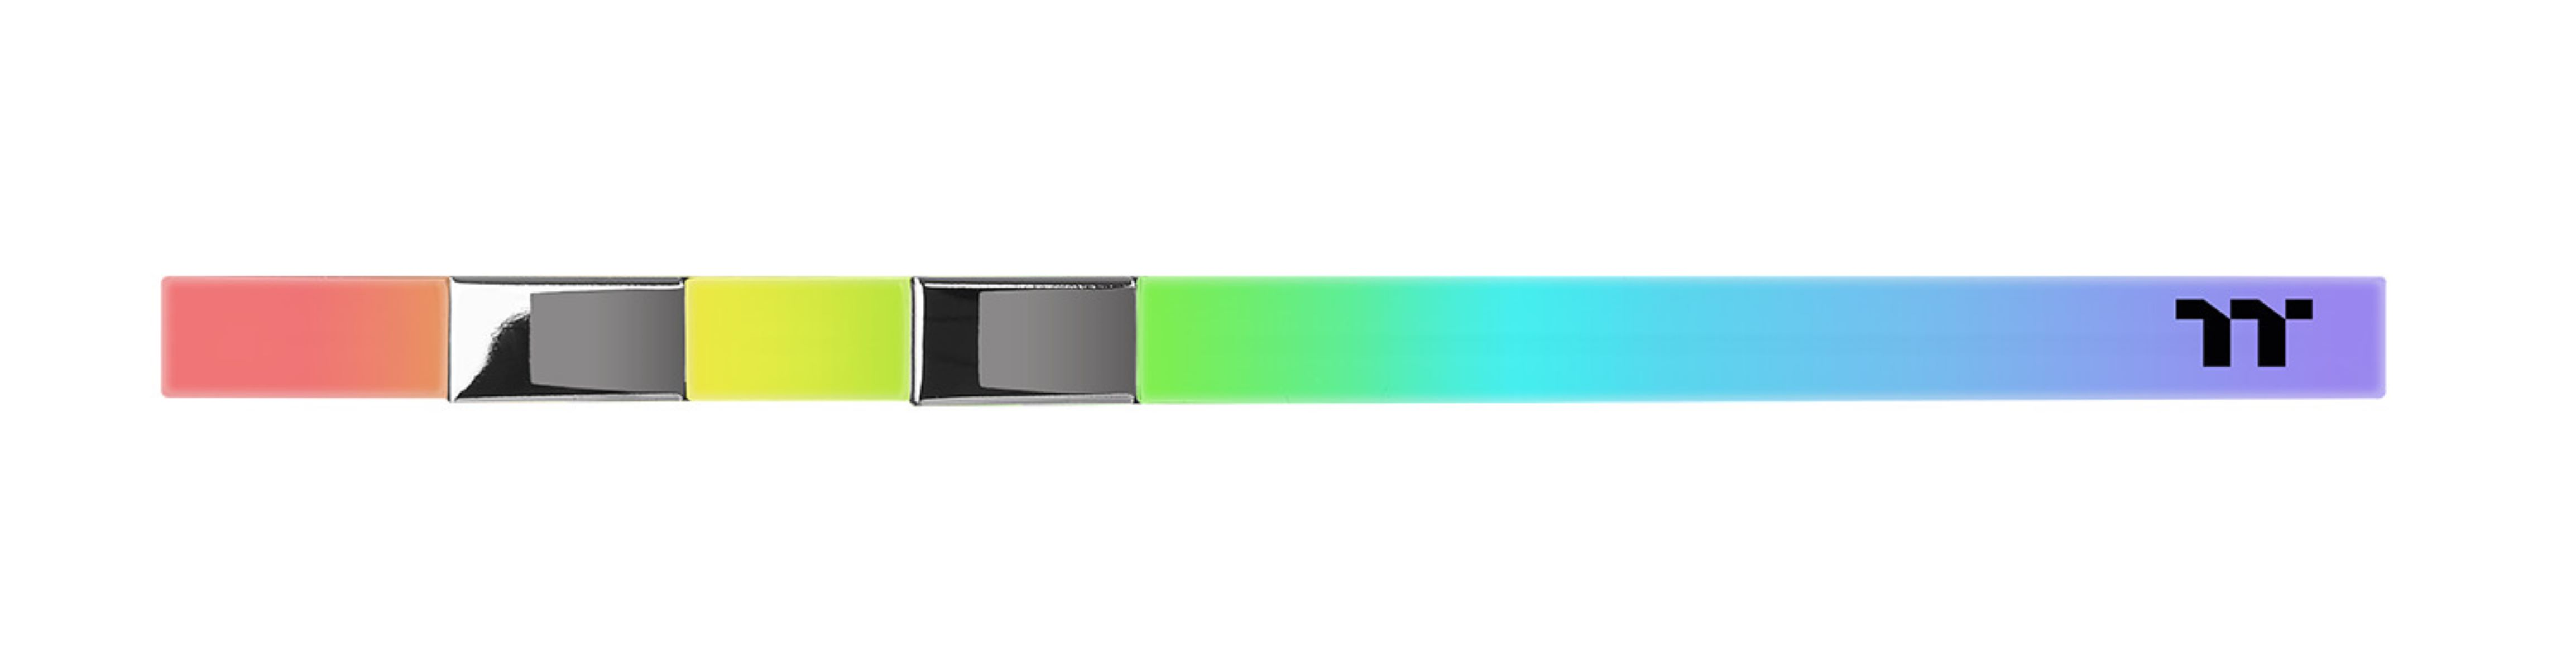 THERMALTAKE TOUGHRAM Arbeitsspeicher 16 Turquoise GB RGB DDR4